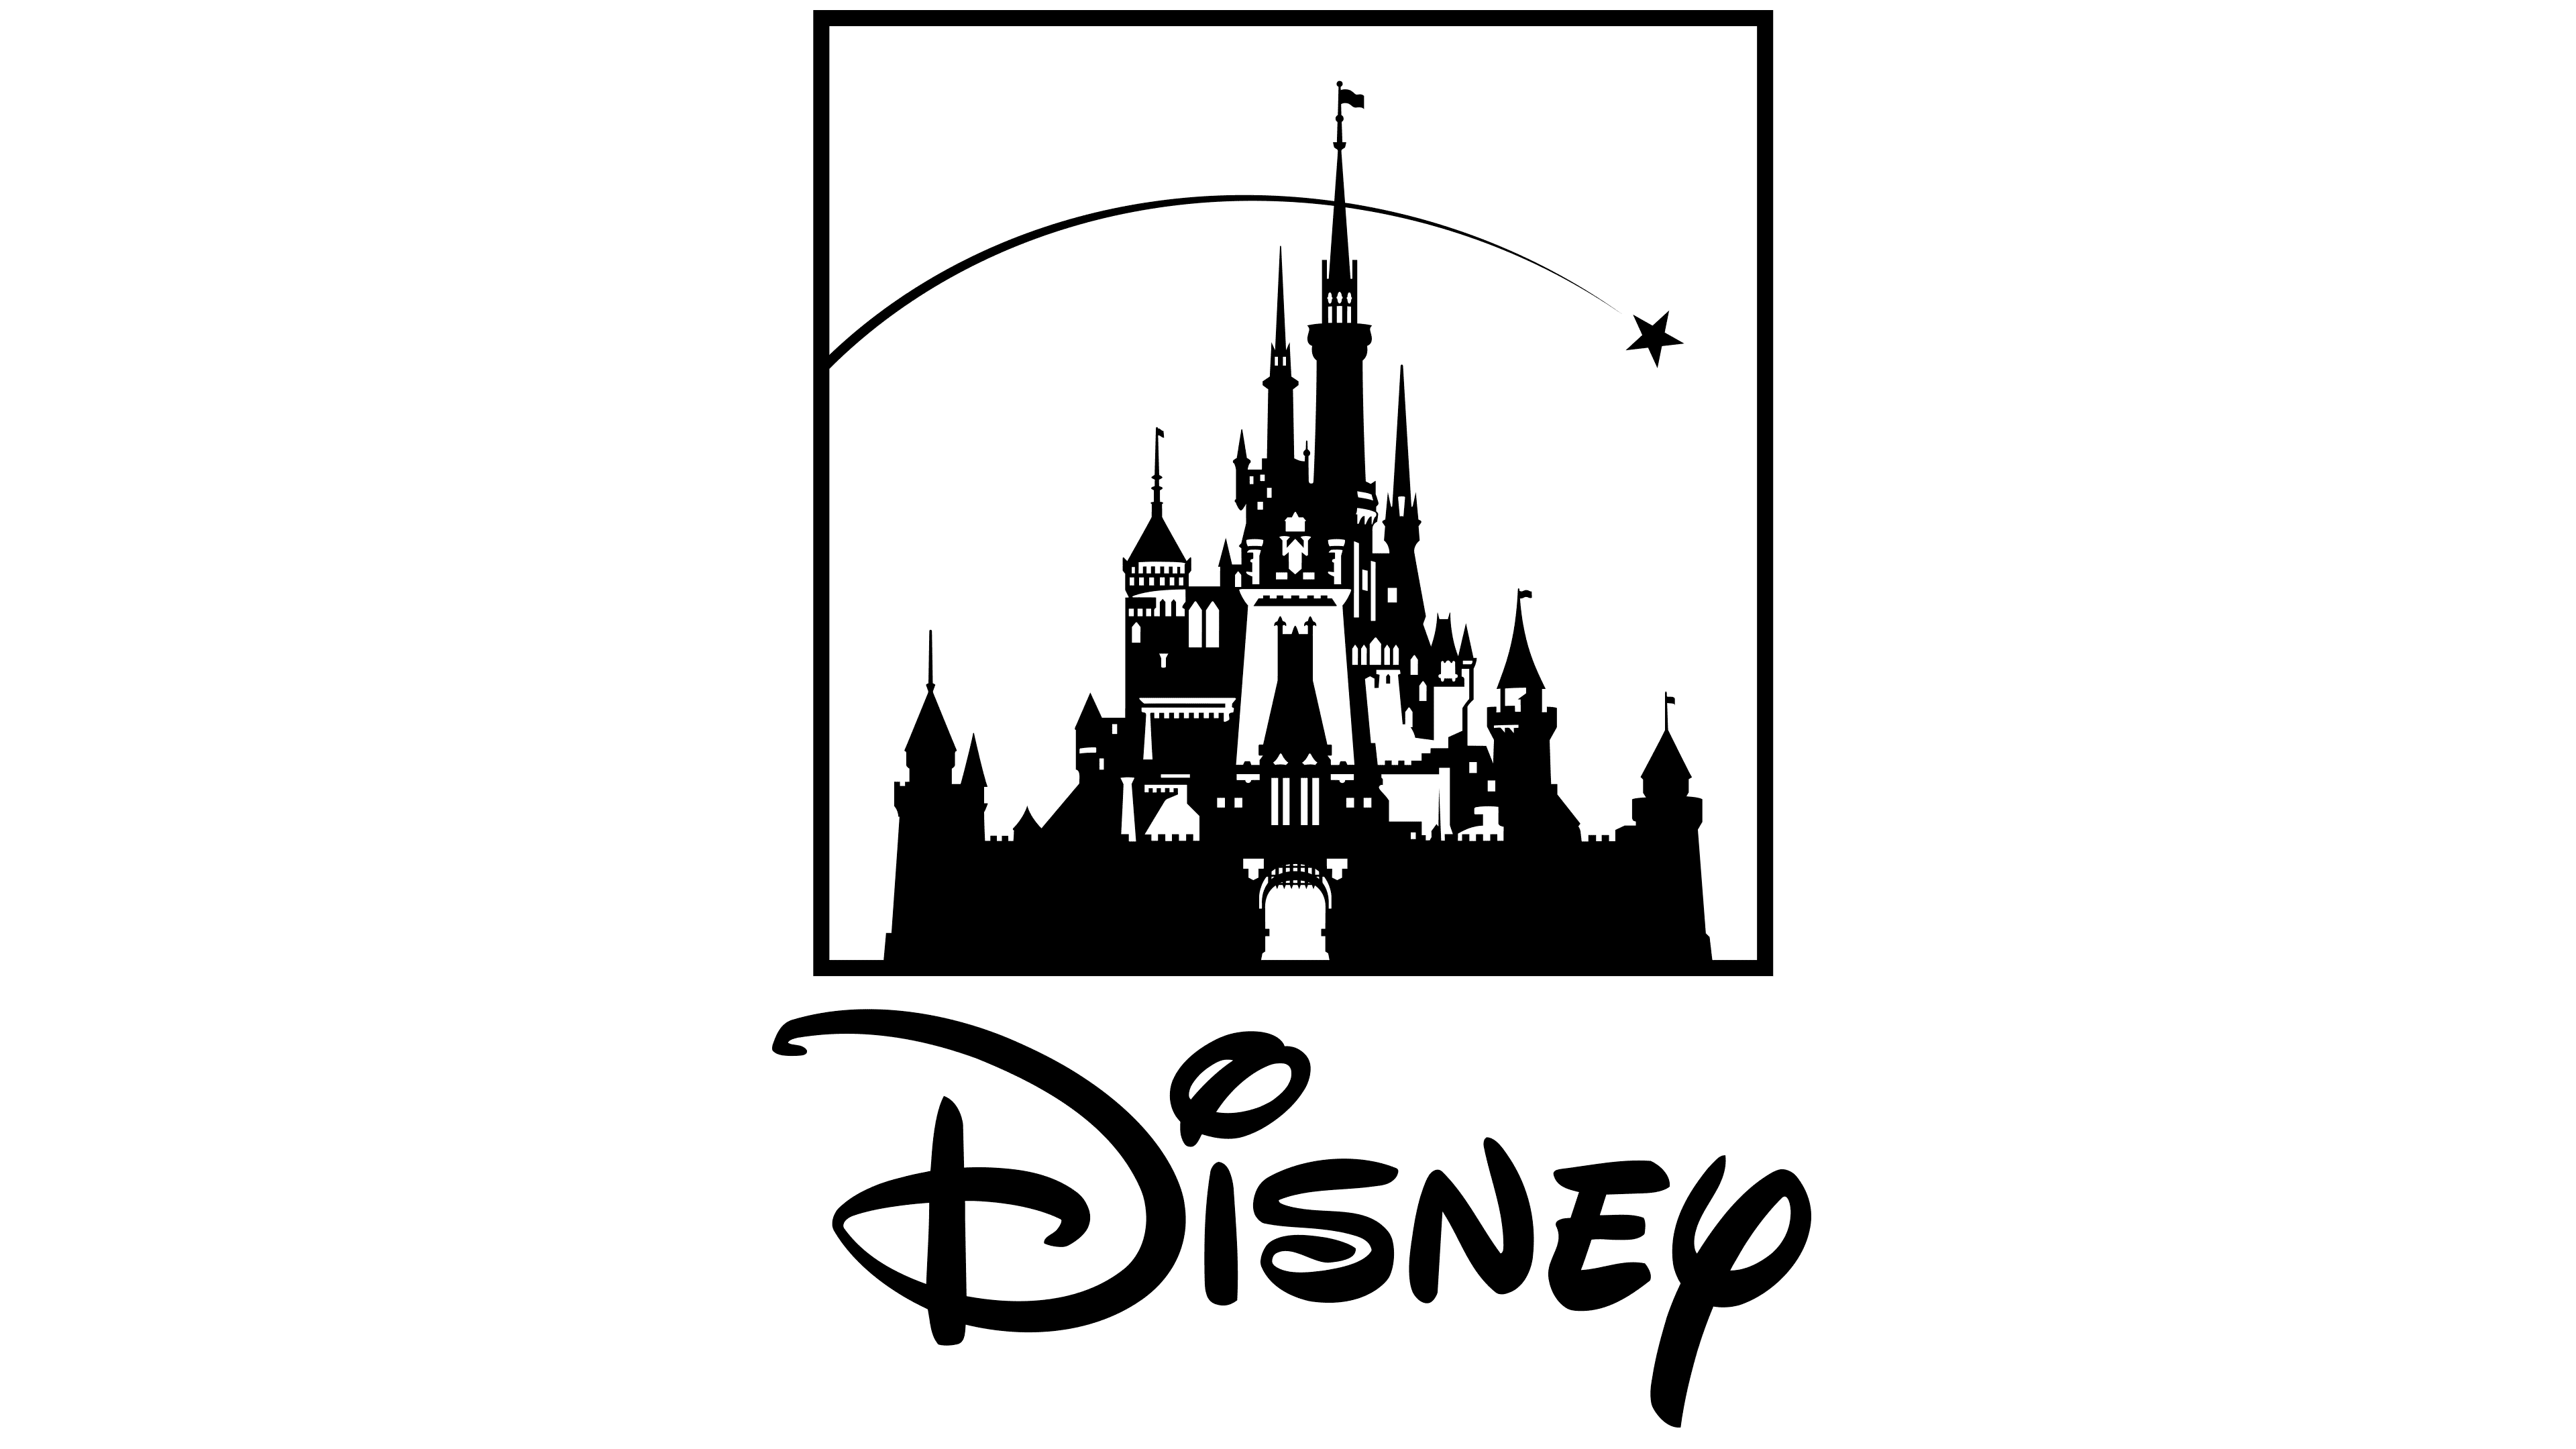 https://1000logos.net/wp-content/uploads/2021/01/Walt-Disney-logo.png